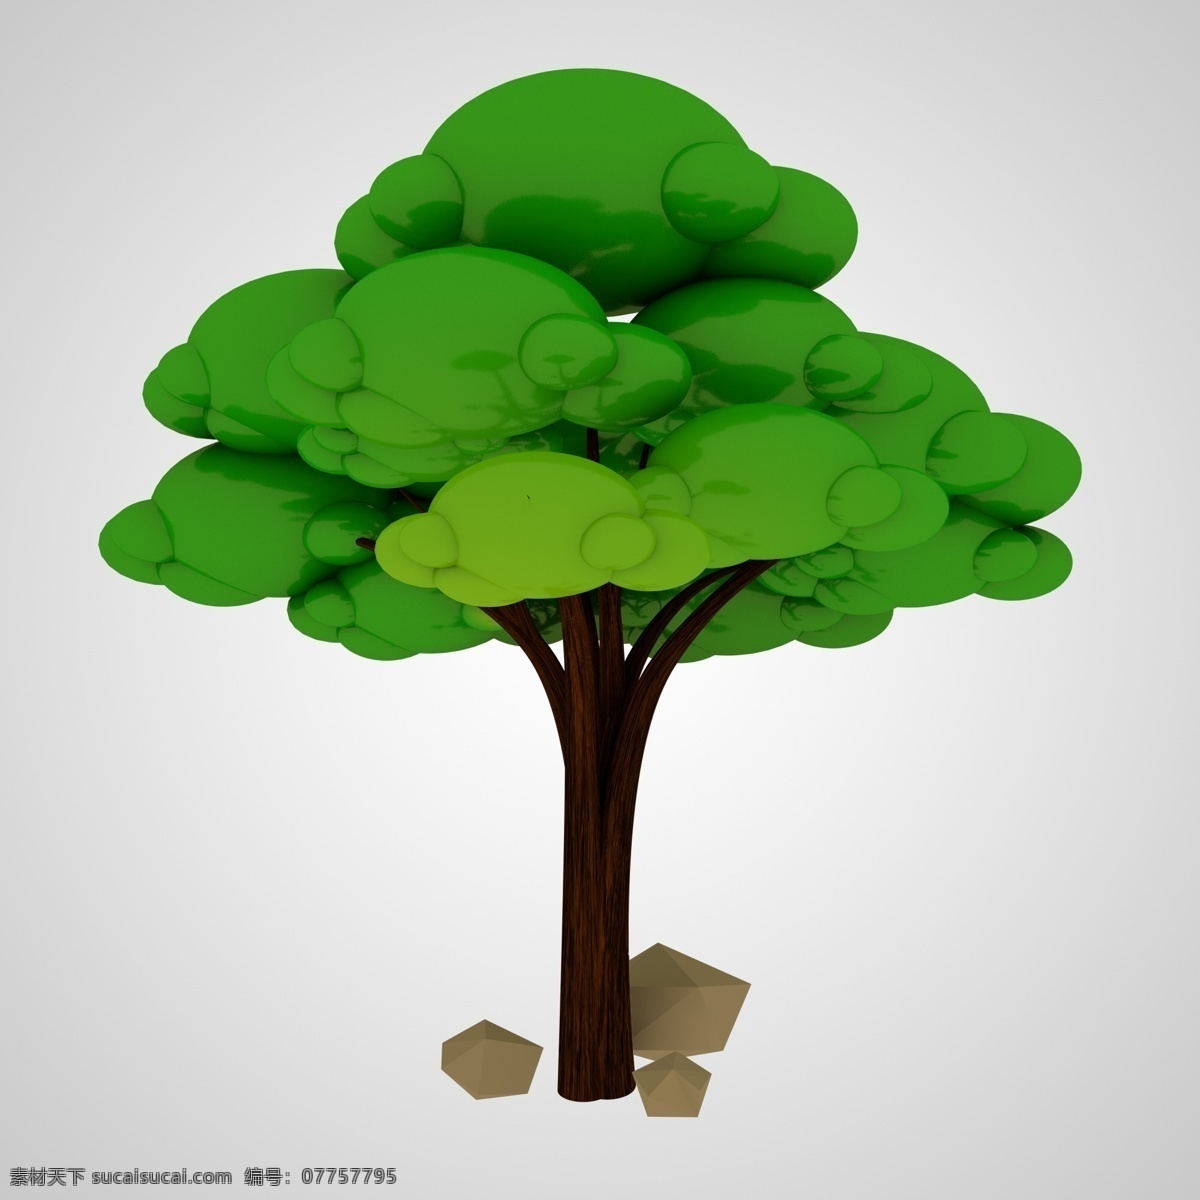 3d 树 植物 卡通 商务 元素 办公 创意 卡通树 可爱 绿色 绿植 3d树模型 立体树 商务元素 商用素材 创意树 几何体 多面体 扁平化 果树 写实 景观 原创psd 高清 糖果色